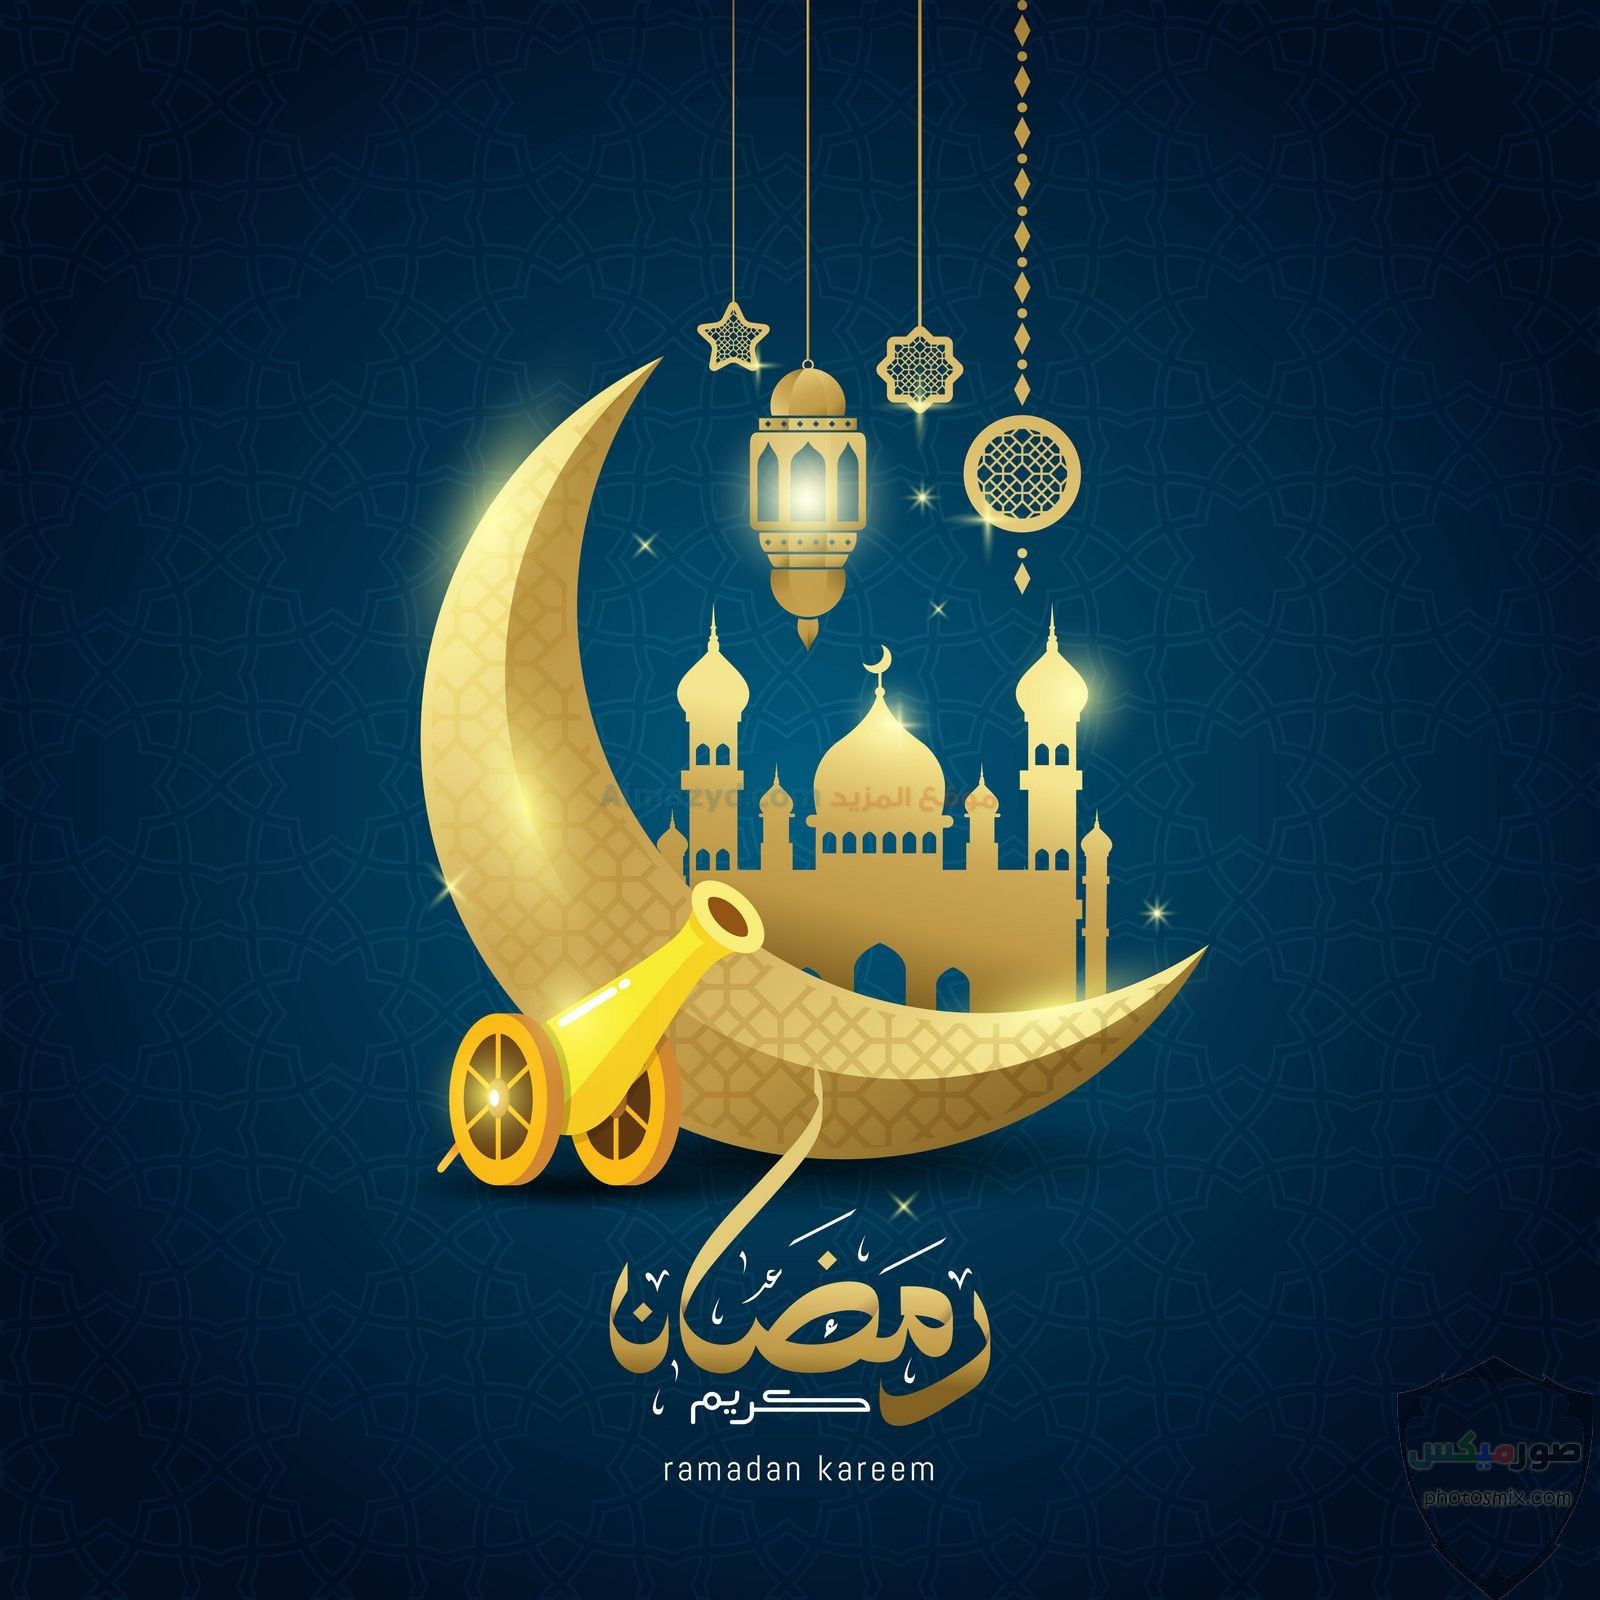 صور رمضان 2020 أجمل صور فوانيس رمضان 2021 بطاقات تهنئة لرمضان تهنئة رمضان بالأسماء 19